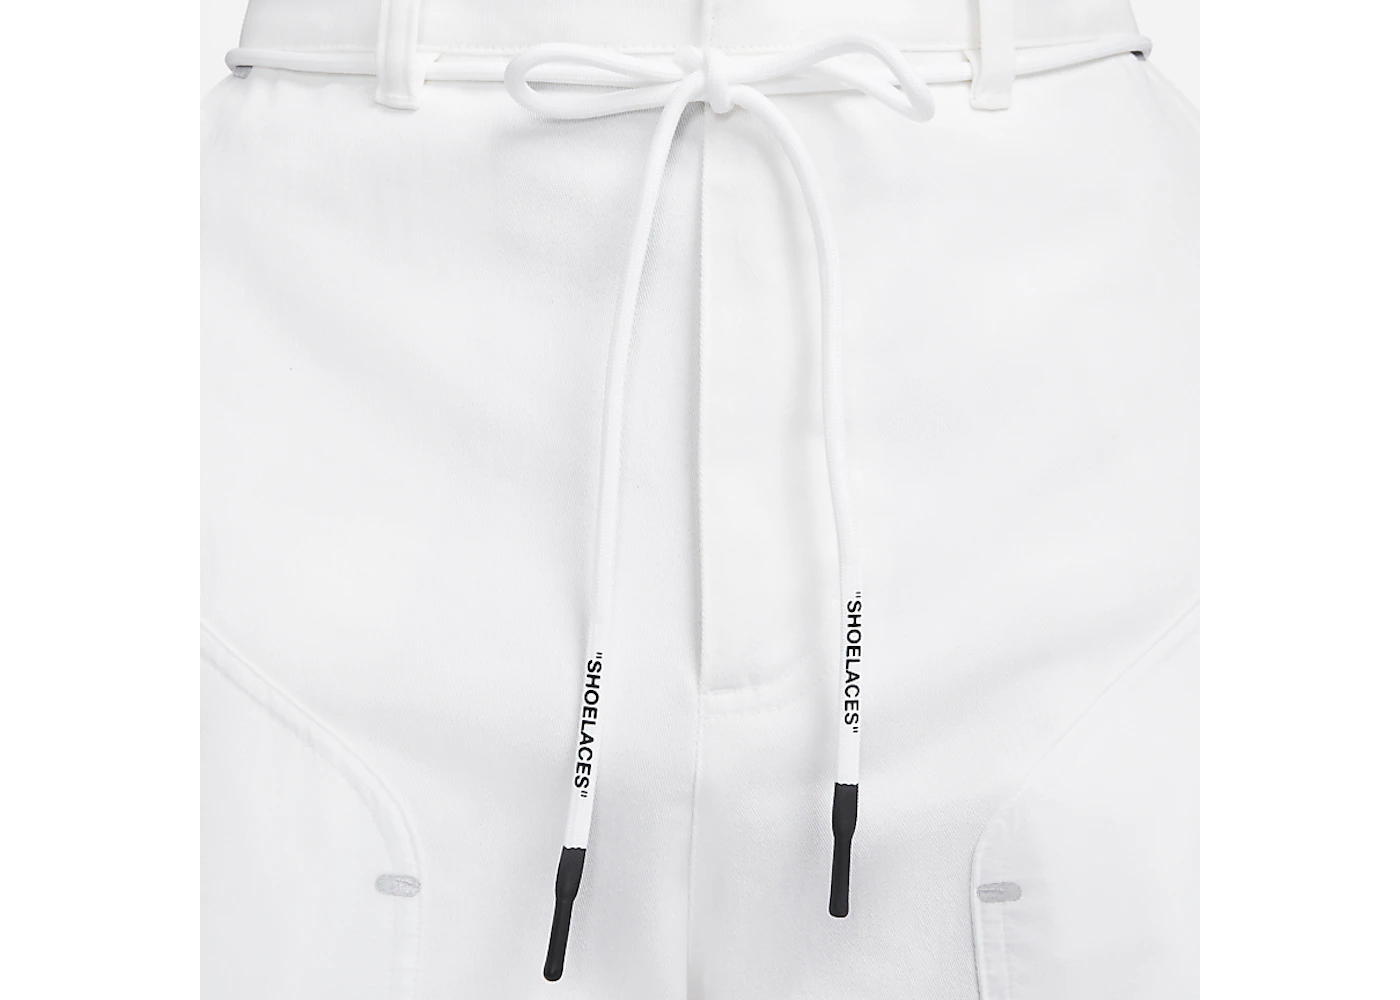 OFF-WHITE x Nike Pants White Men's - SS21 - US